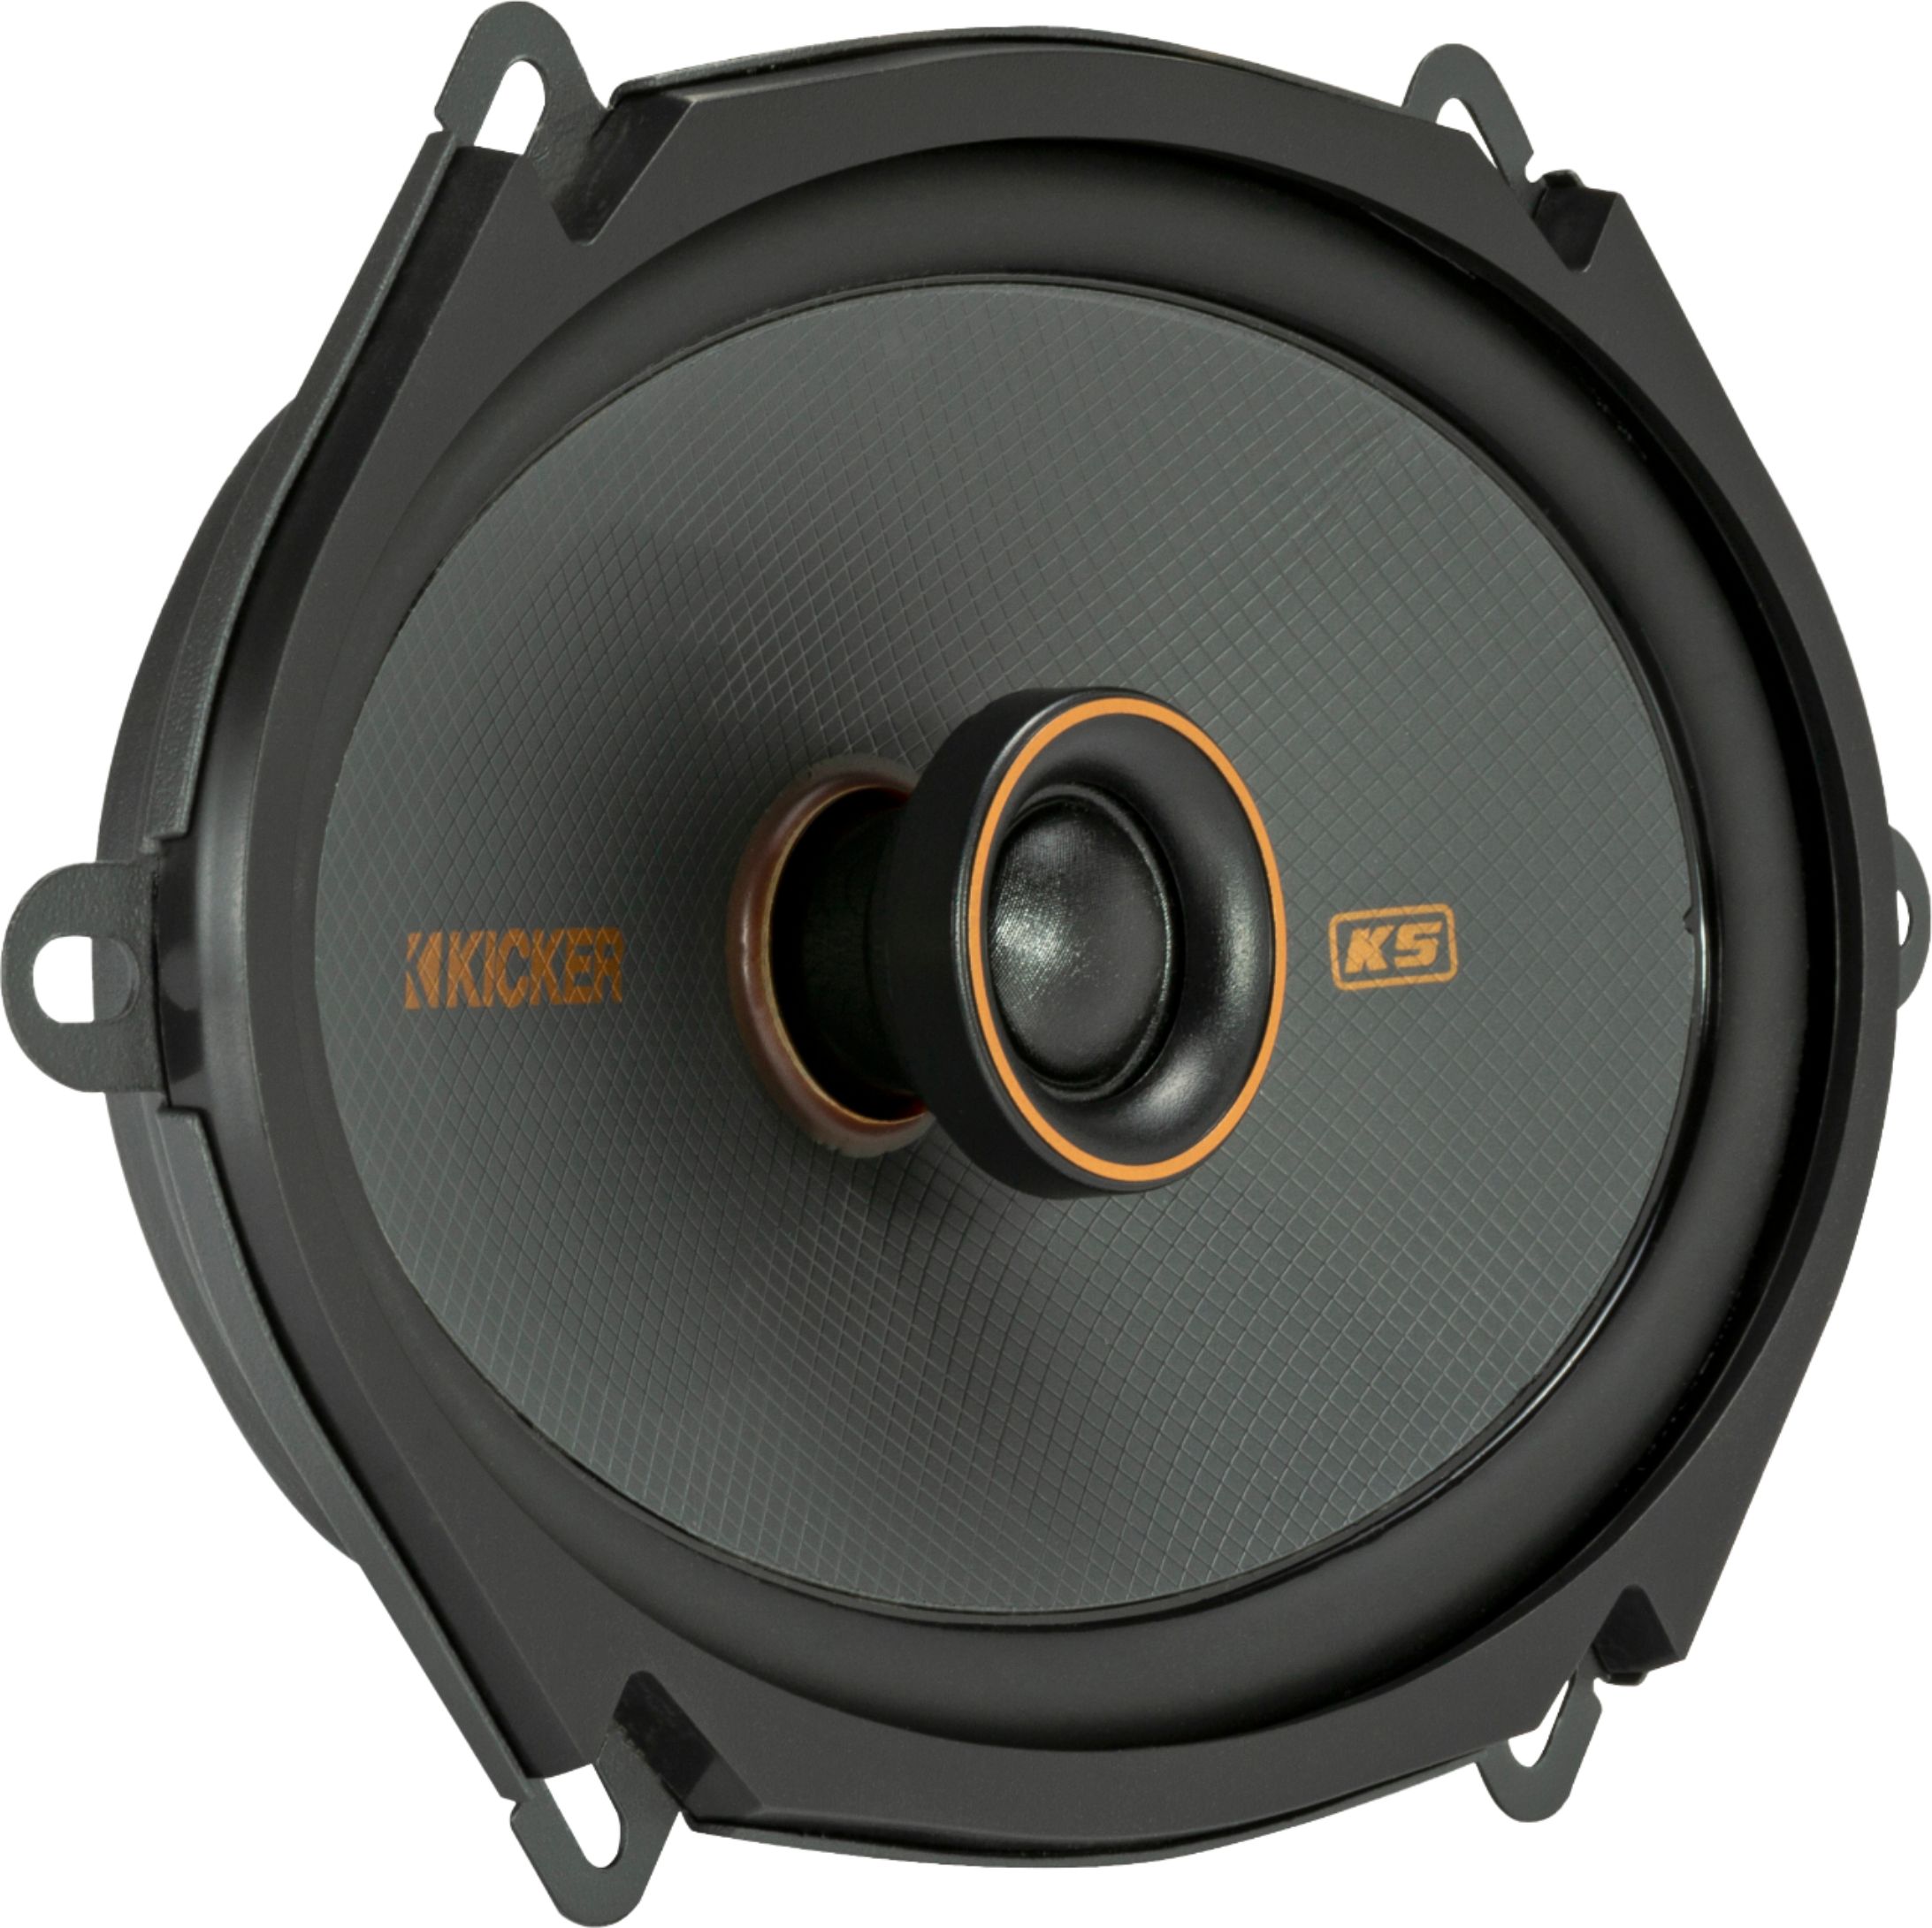 Angle View: KICKER - KS Series 6" x 8" 2-Way Car Speakers with Polypropylene Cones (Pair) - Black